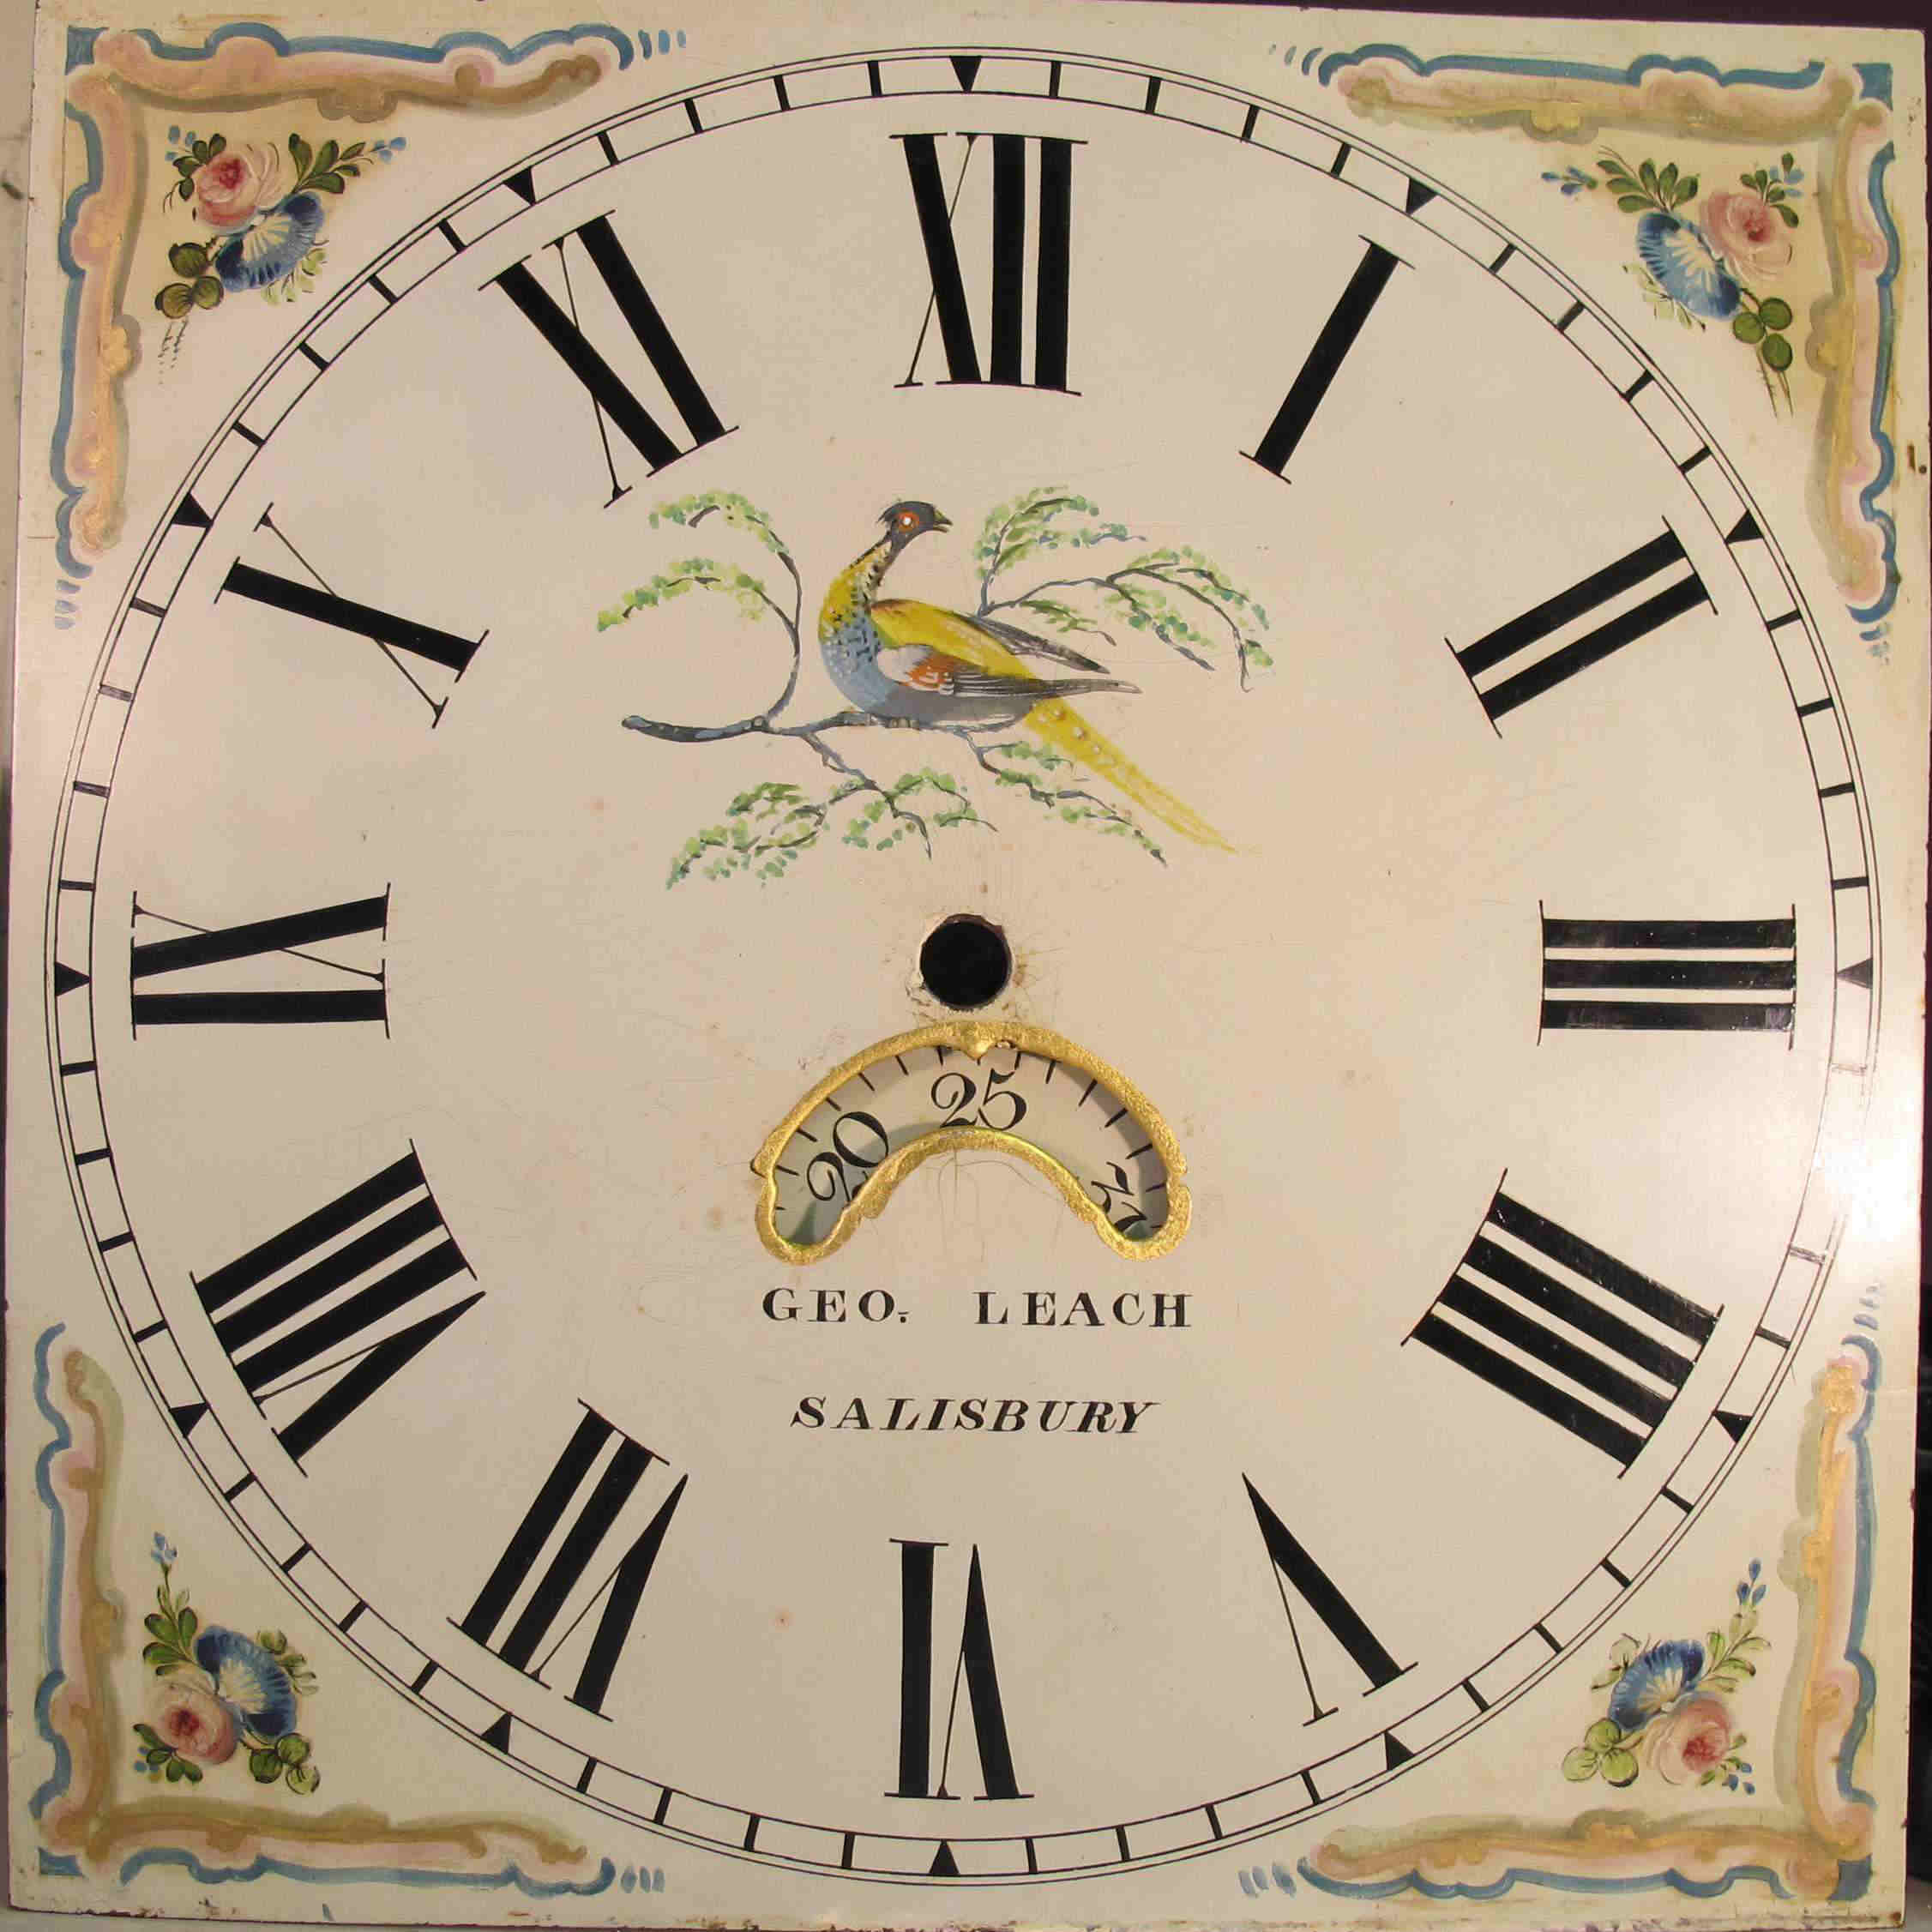 Restored dial of Longcase Clock by Leach Salisbury